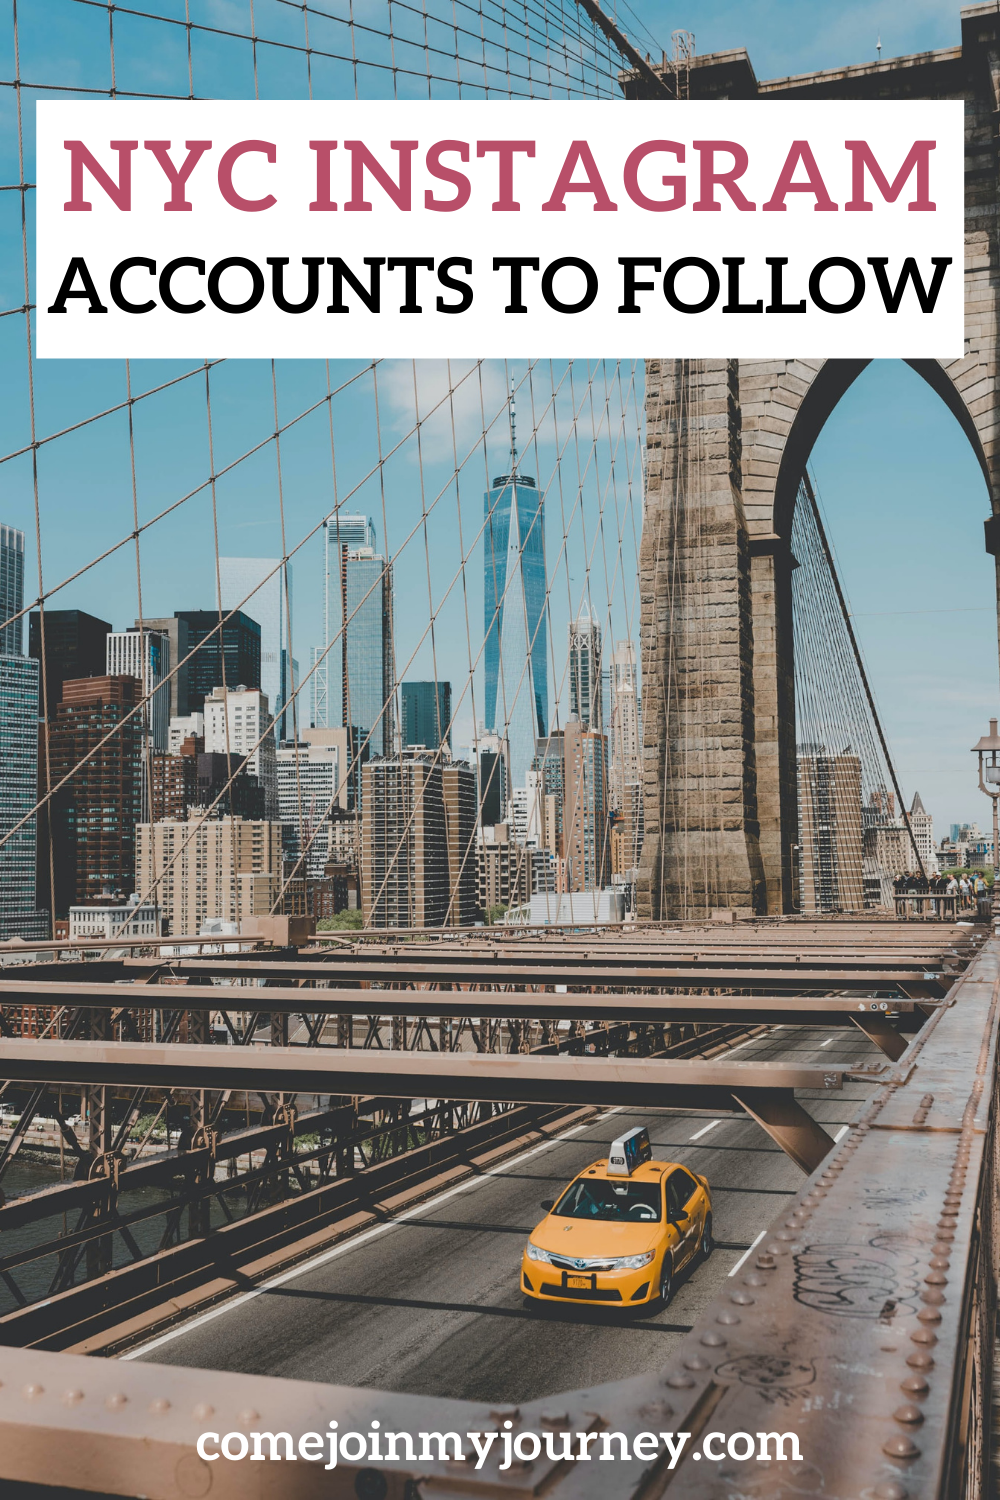 NYC Instagram accounts-1